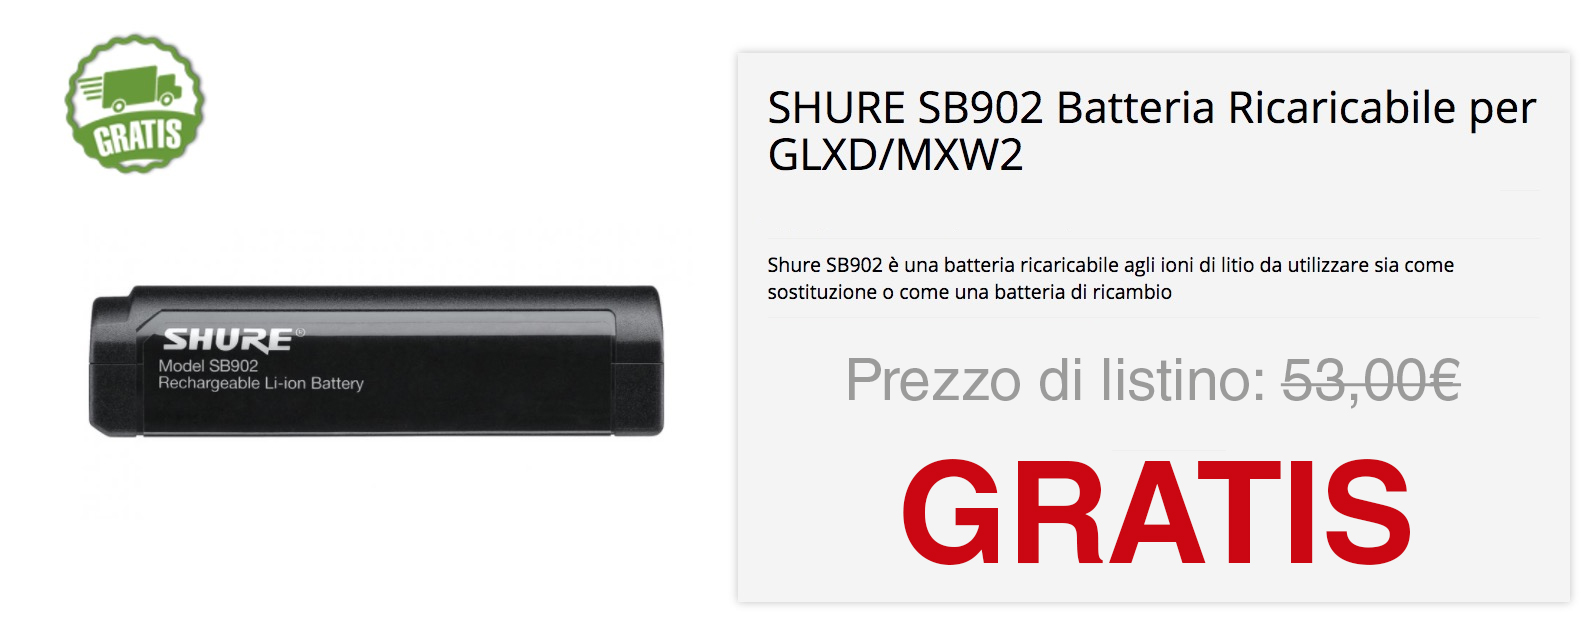 SHURE SB902 Batteria Ricaricabile per GLXD/MXW2